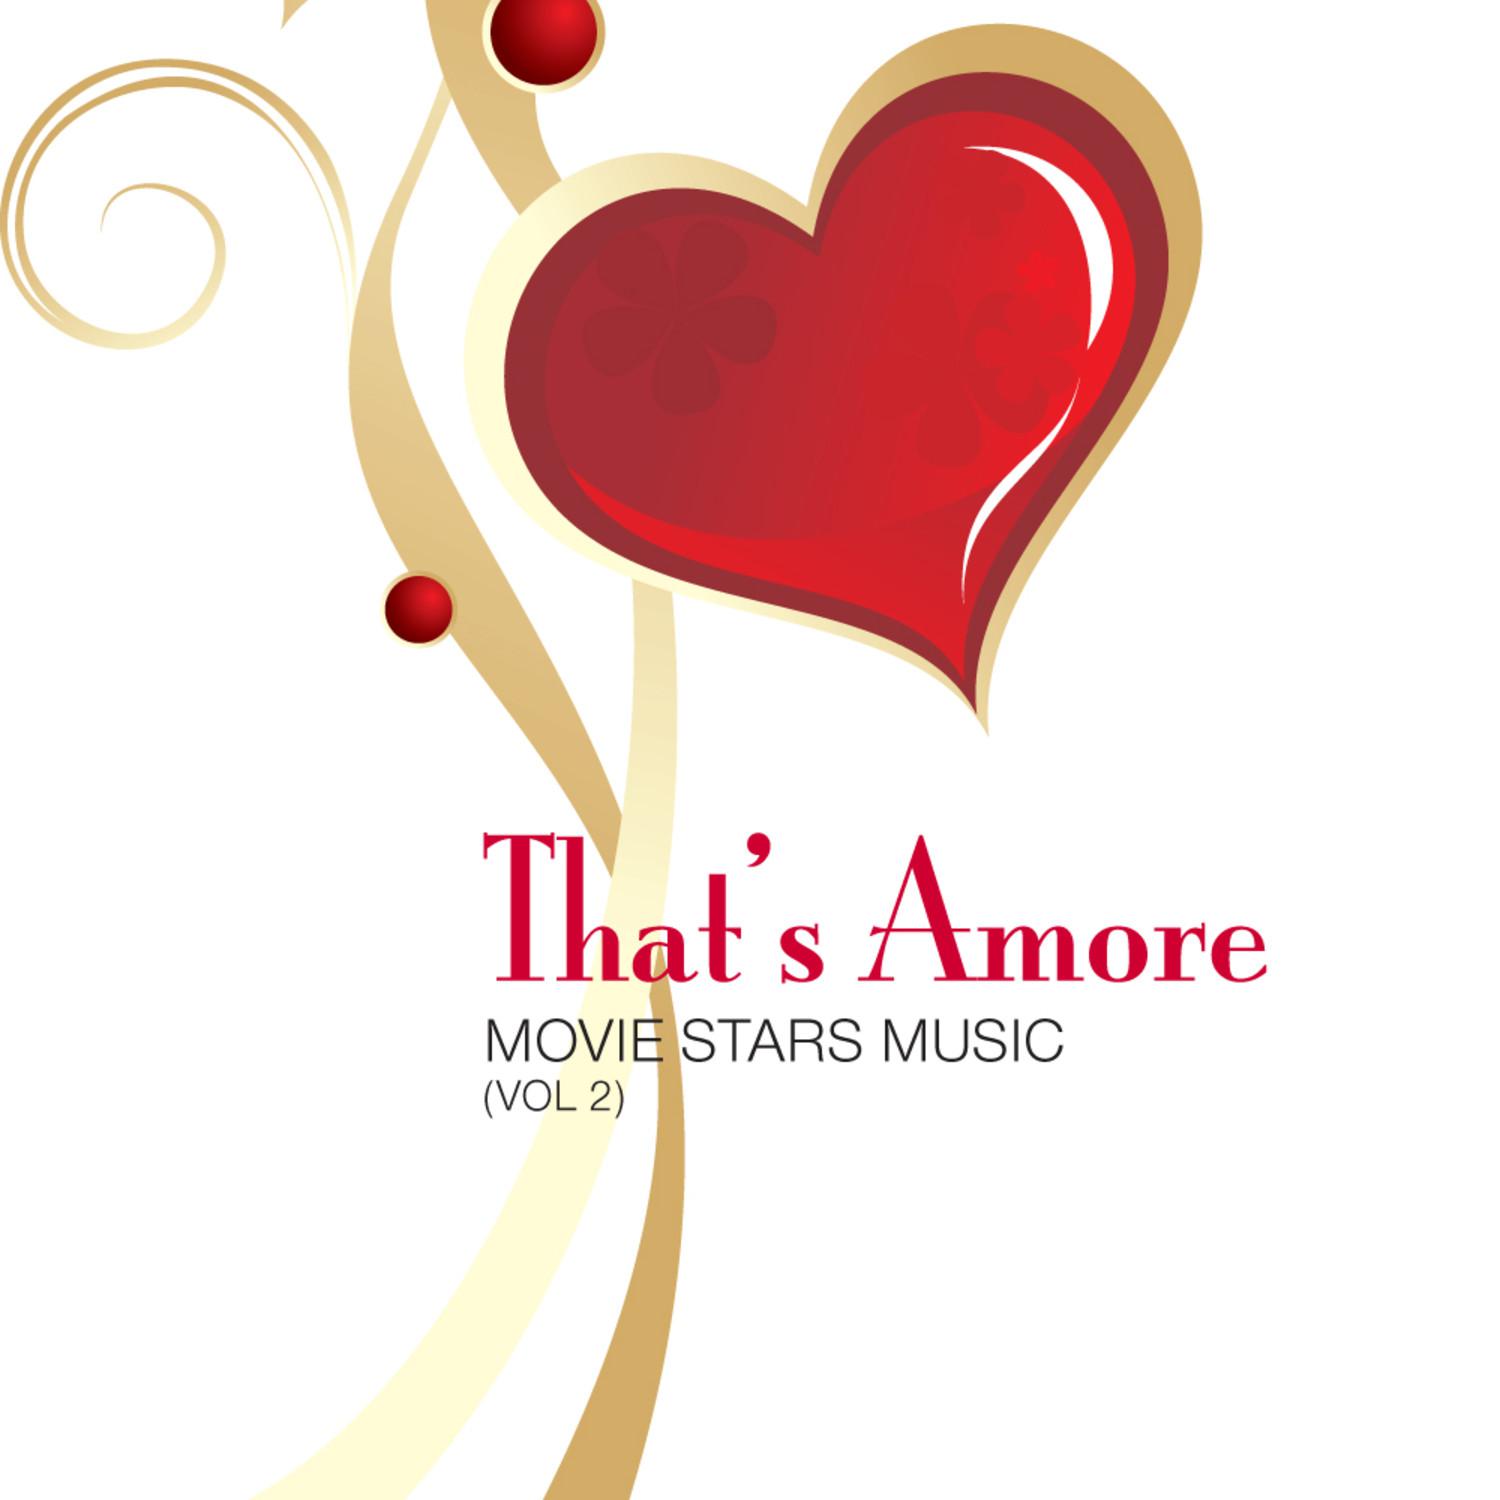 That's Amore: Movie Stars Music Vol 2